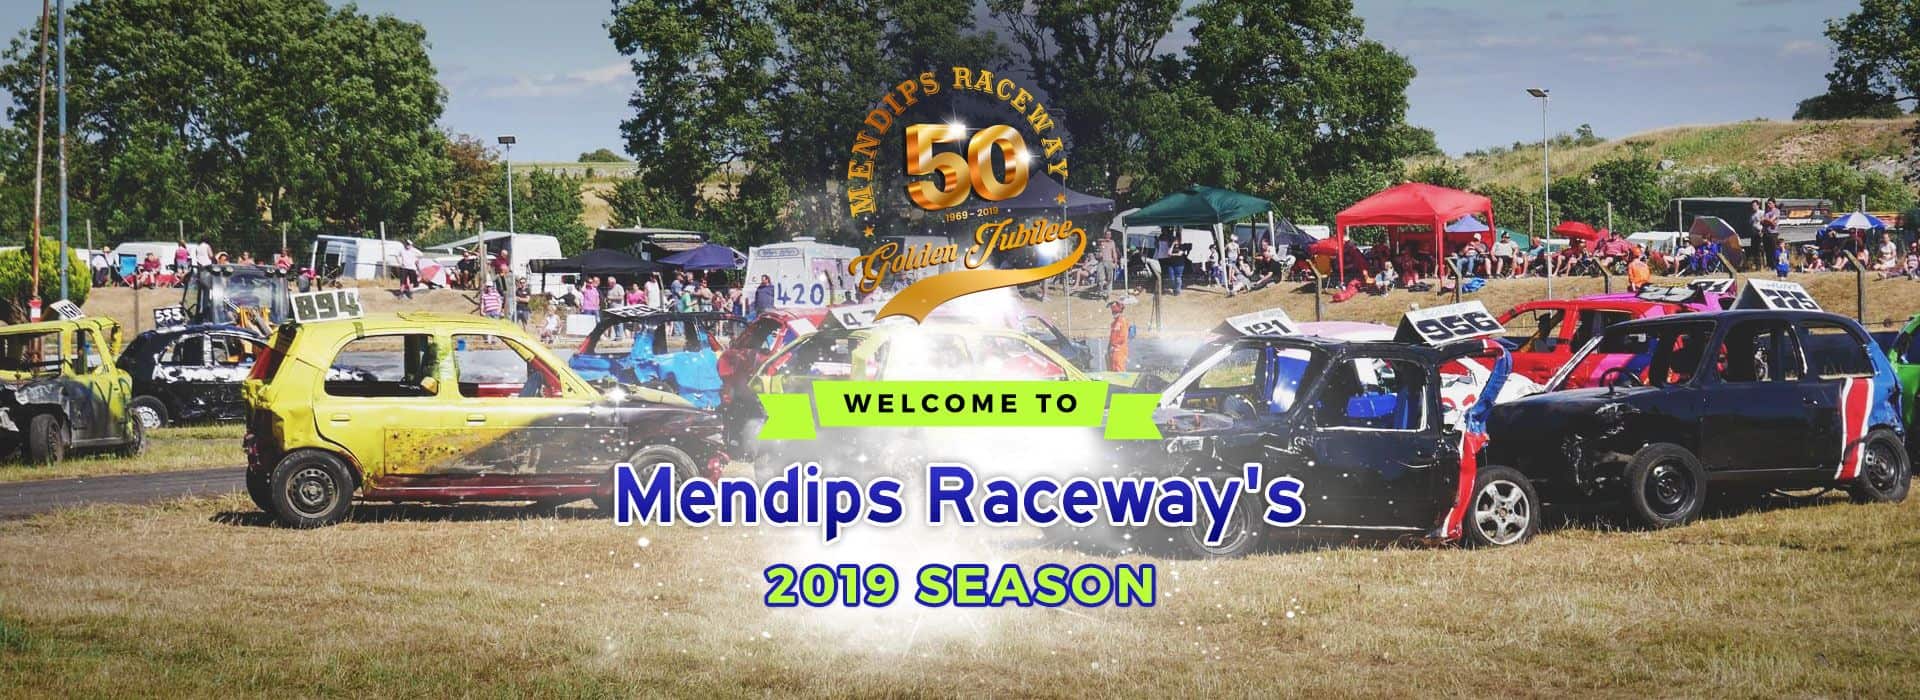 Mendips Raceway in UK